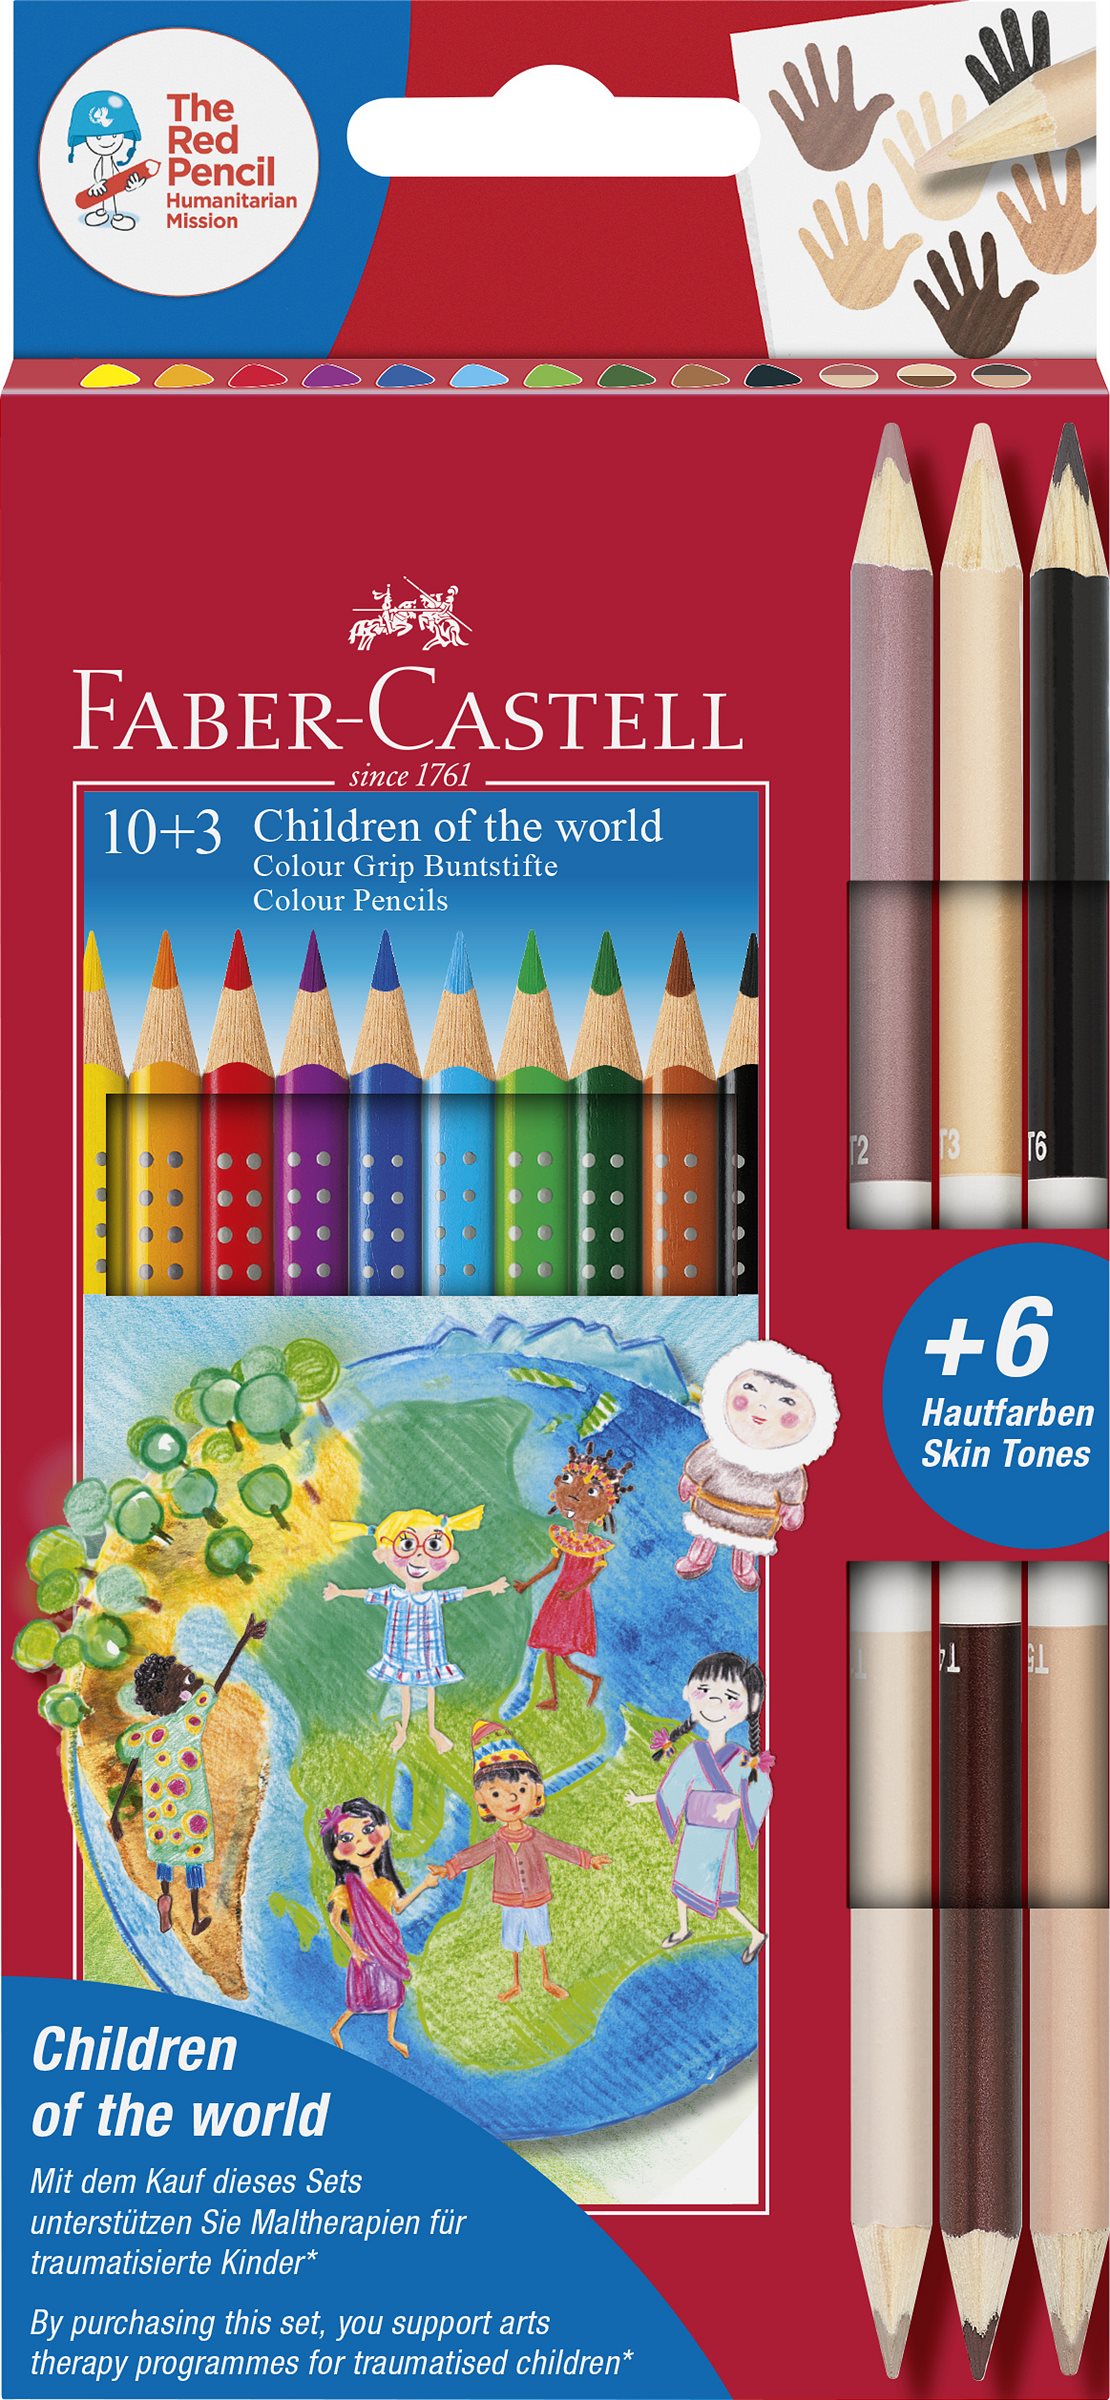 Faber-Castell_Children of the world Buntstiftset 10+3_10 EUR